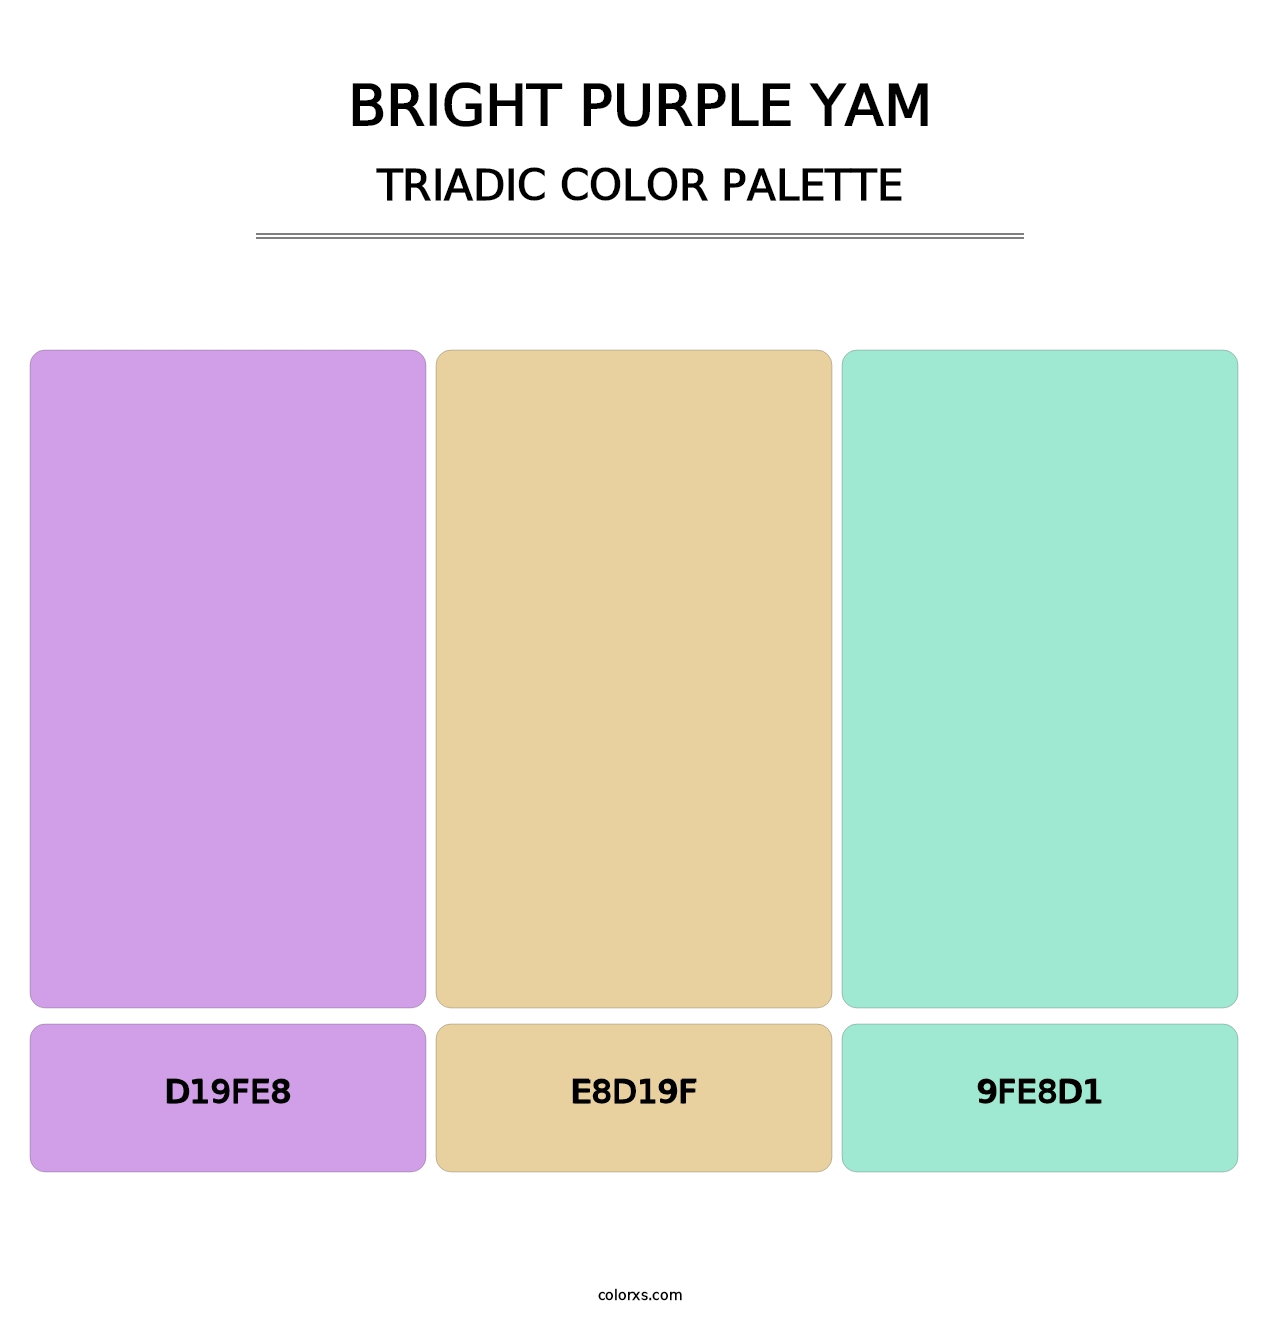 Bright Purple Yam - Triadic Color Palette